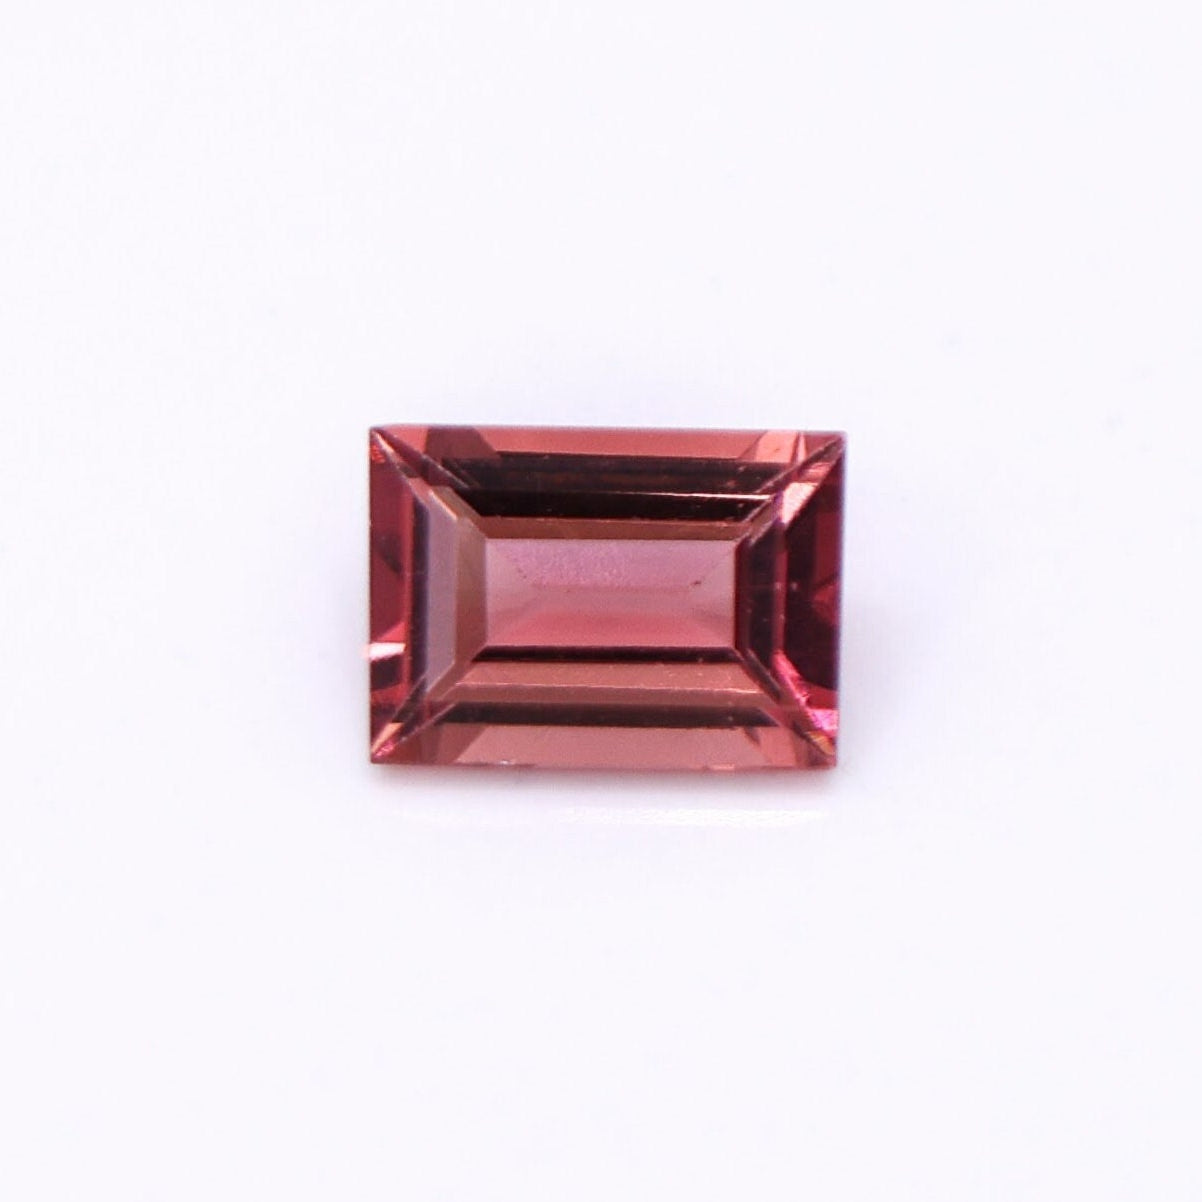 Gemstones-Natural Pink Tourmaline Loose Gemstone || Brilliant Cut 7x5mm || Heat Treated || Jewelry Center Stone || October Birthstone || - NNJGemstones